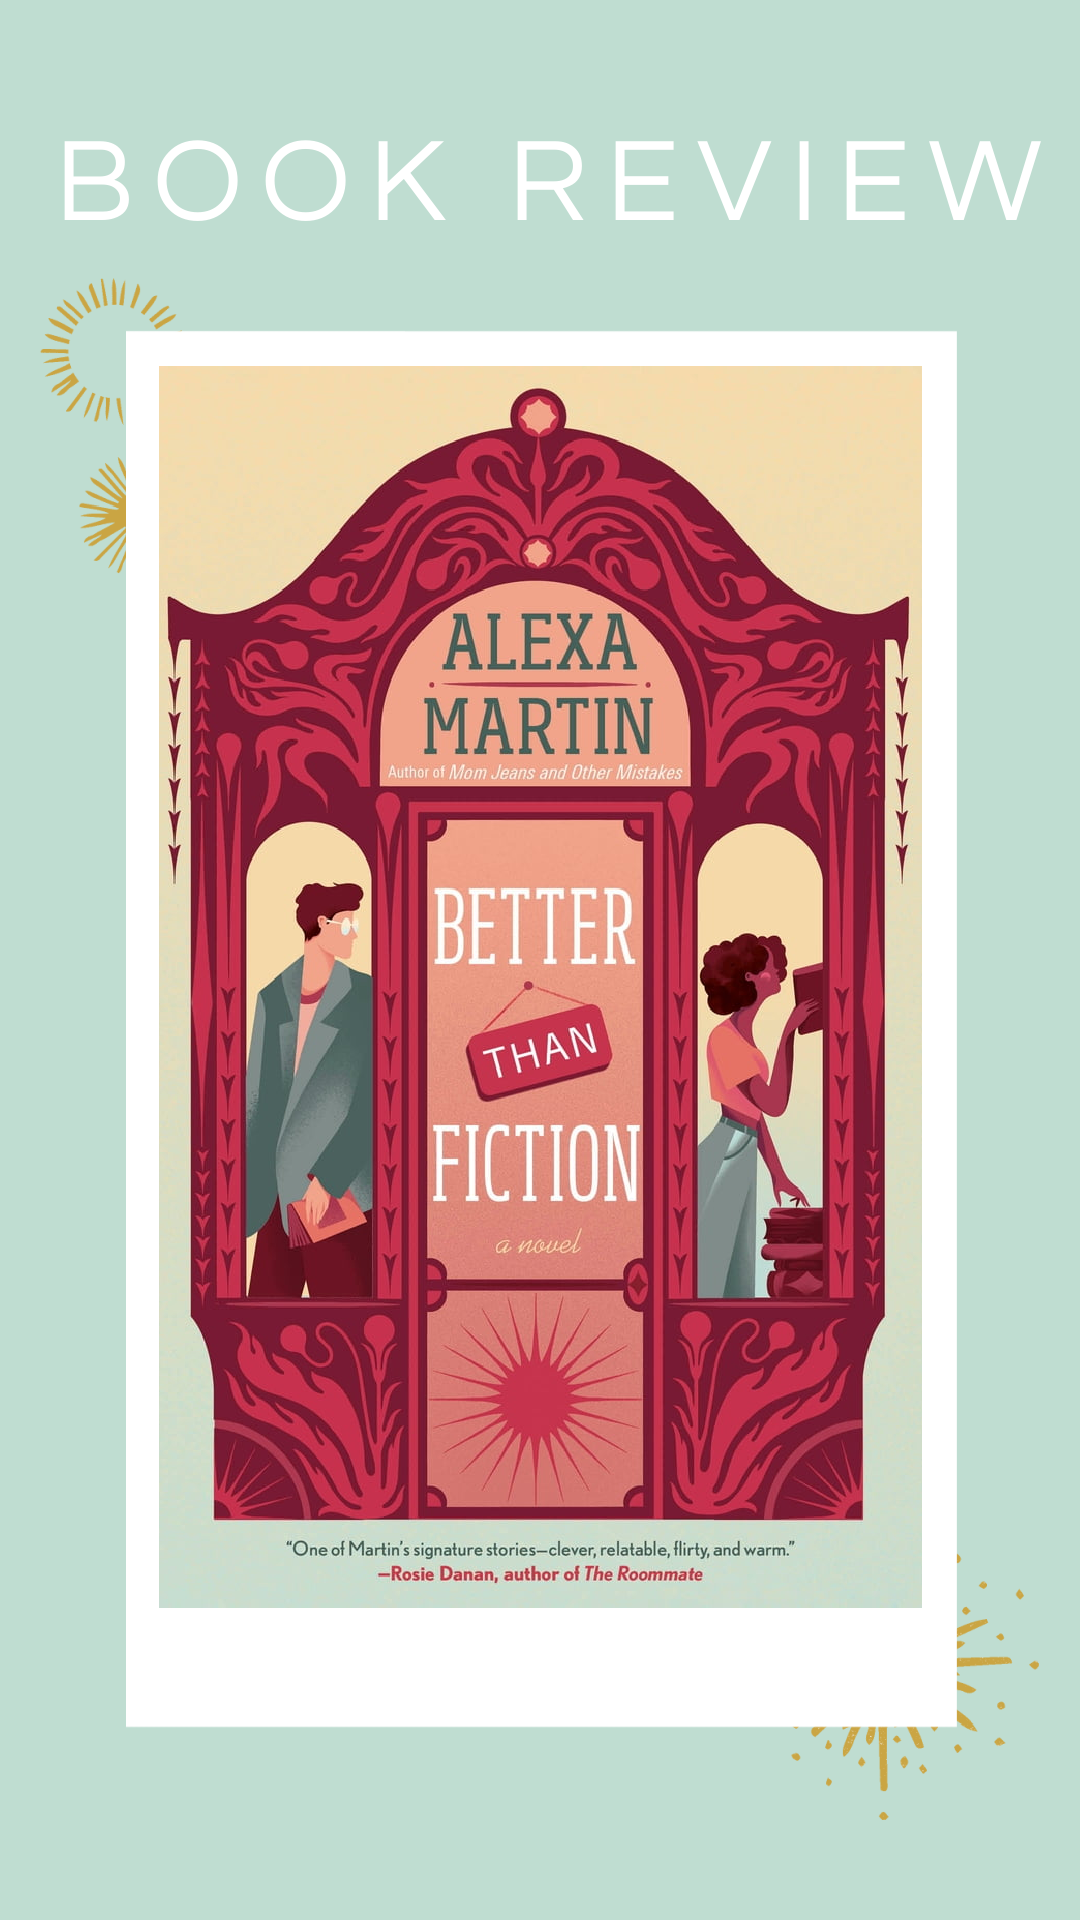 Book Review: Better than Fiction by Alexa Martin